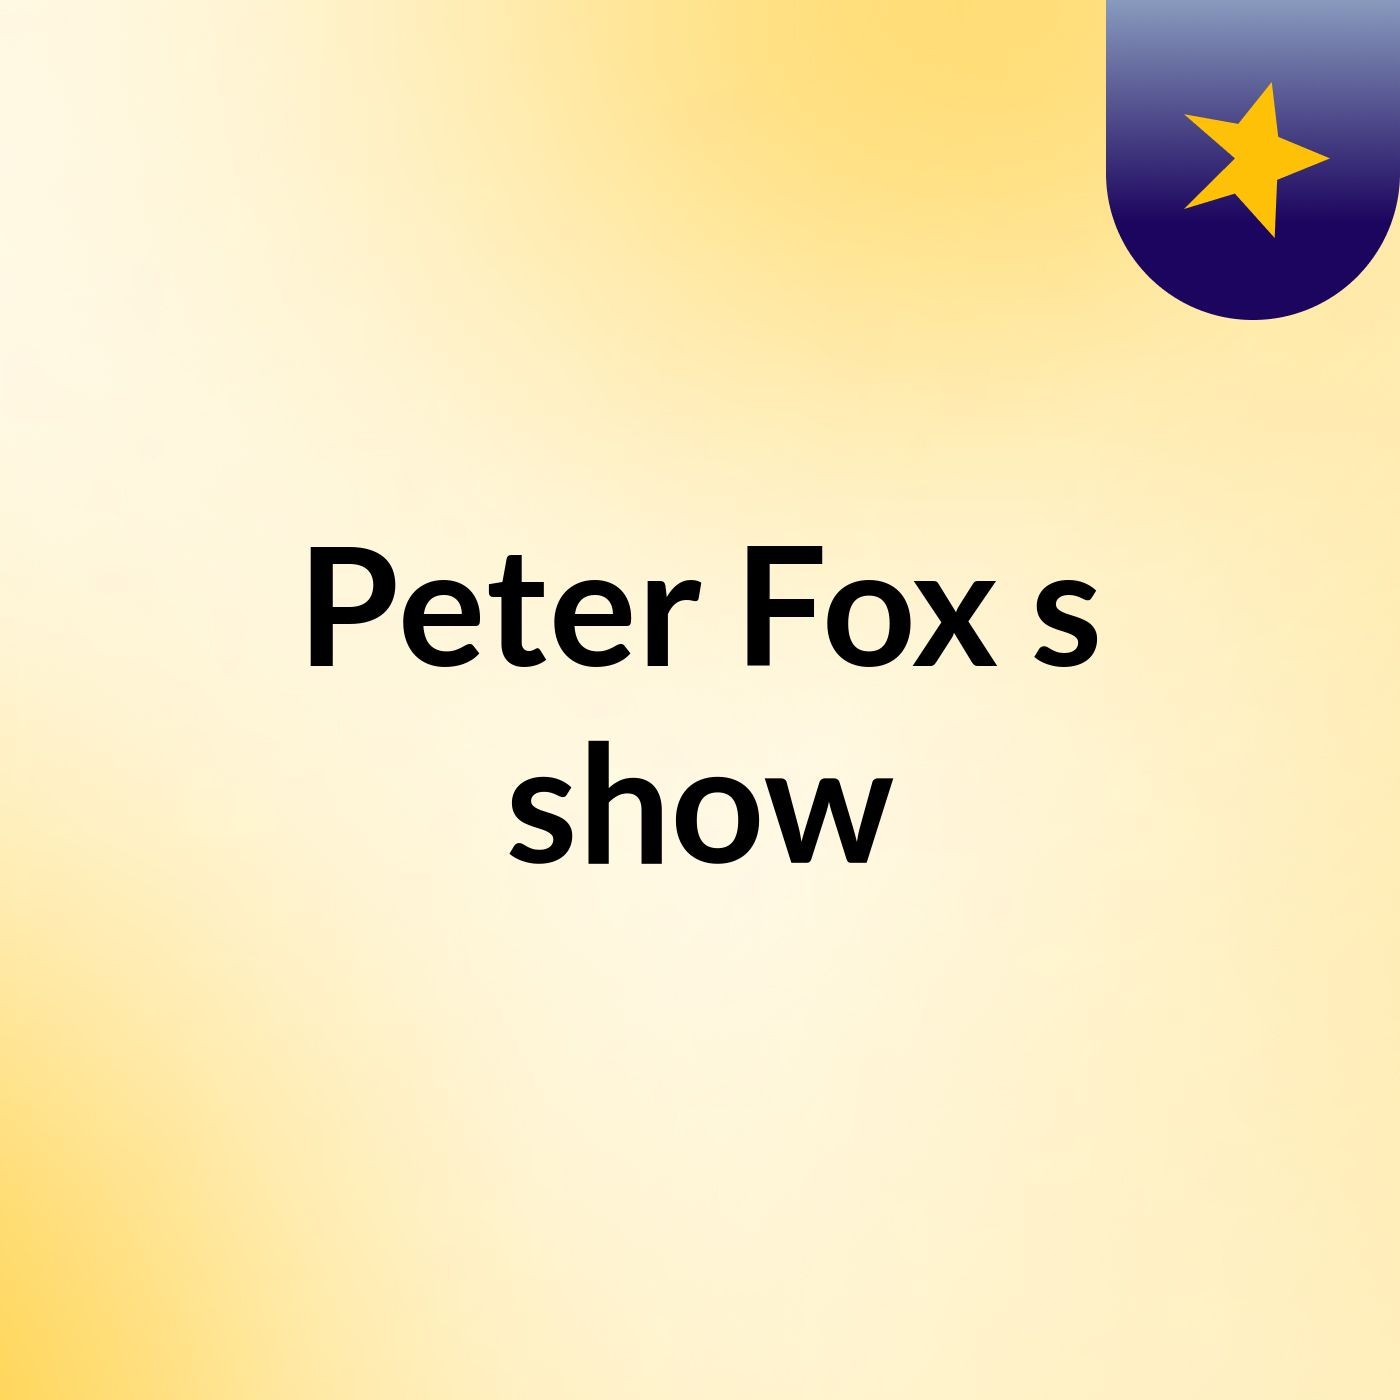 Peter Fox's show